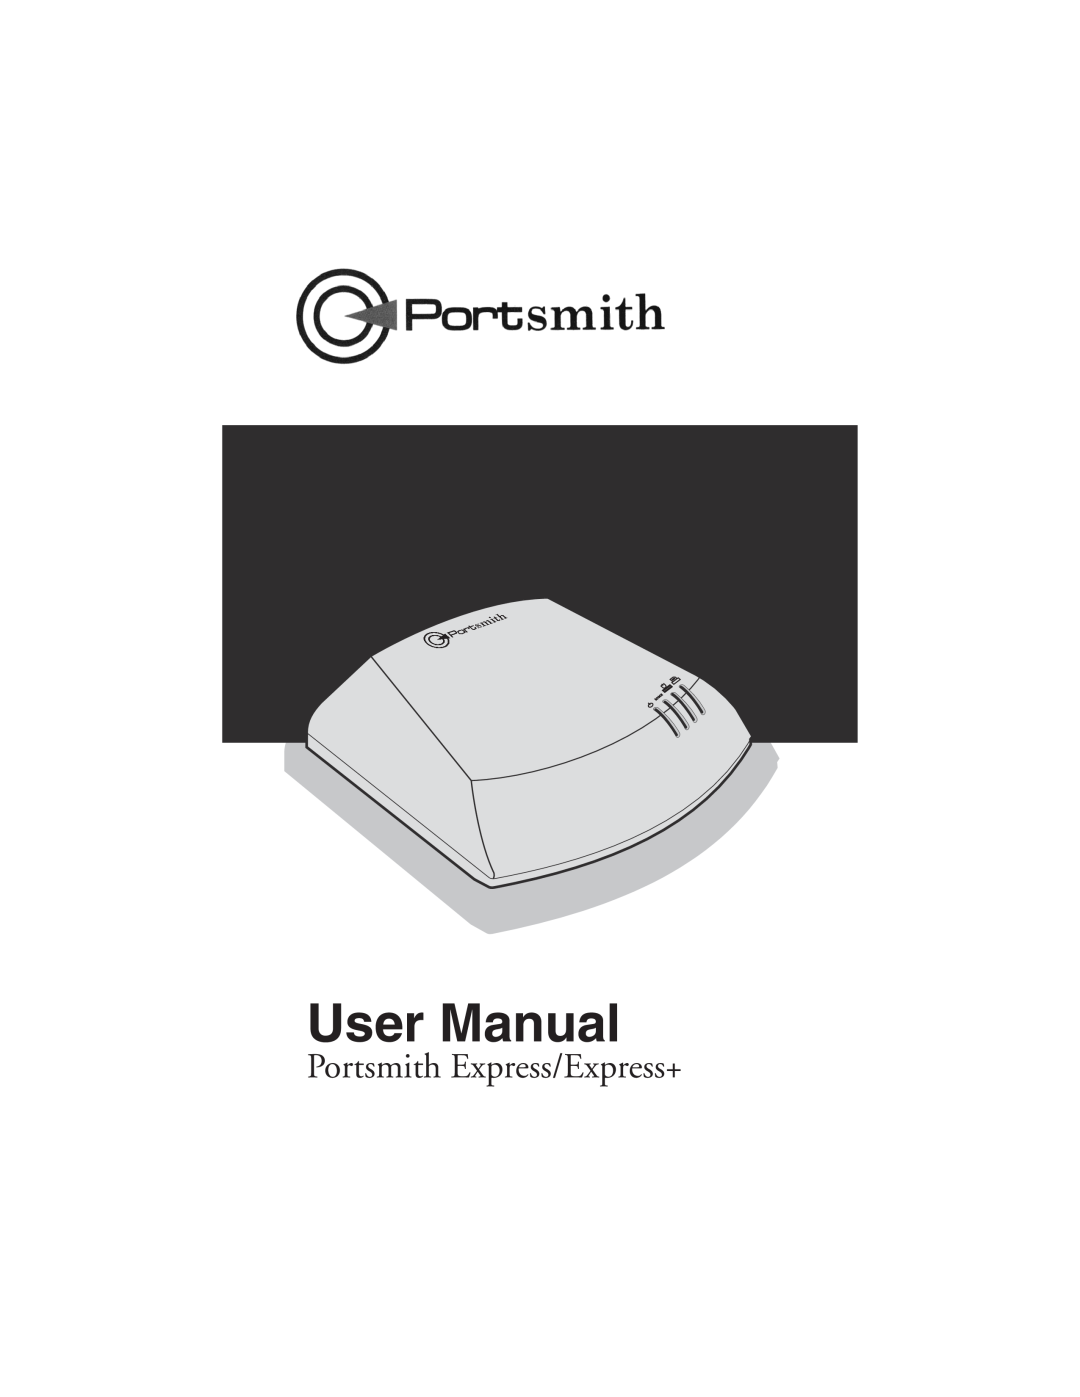 Portsmith USB user manual User Manual, Portsmith Express/Express+ 